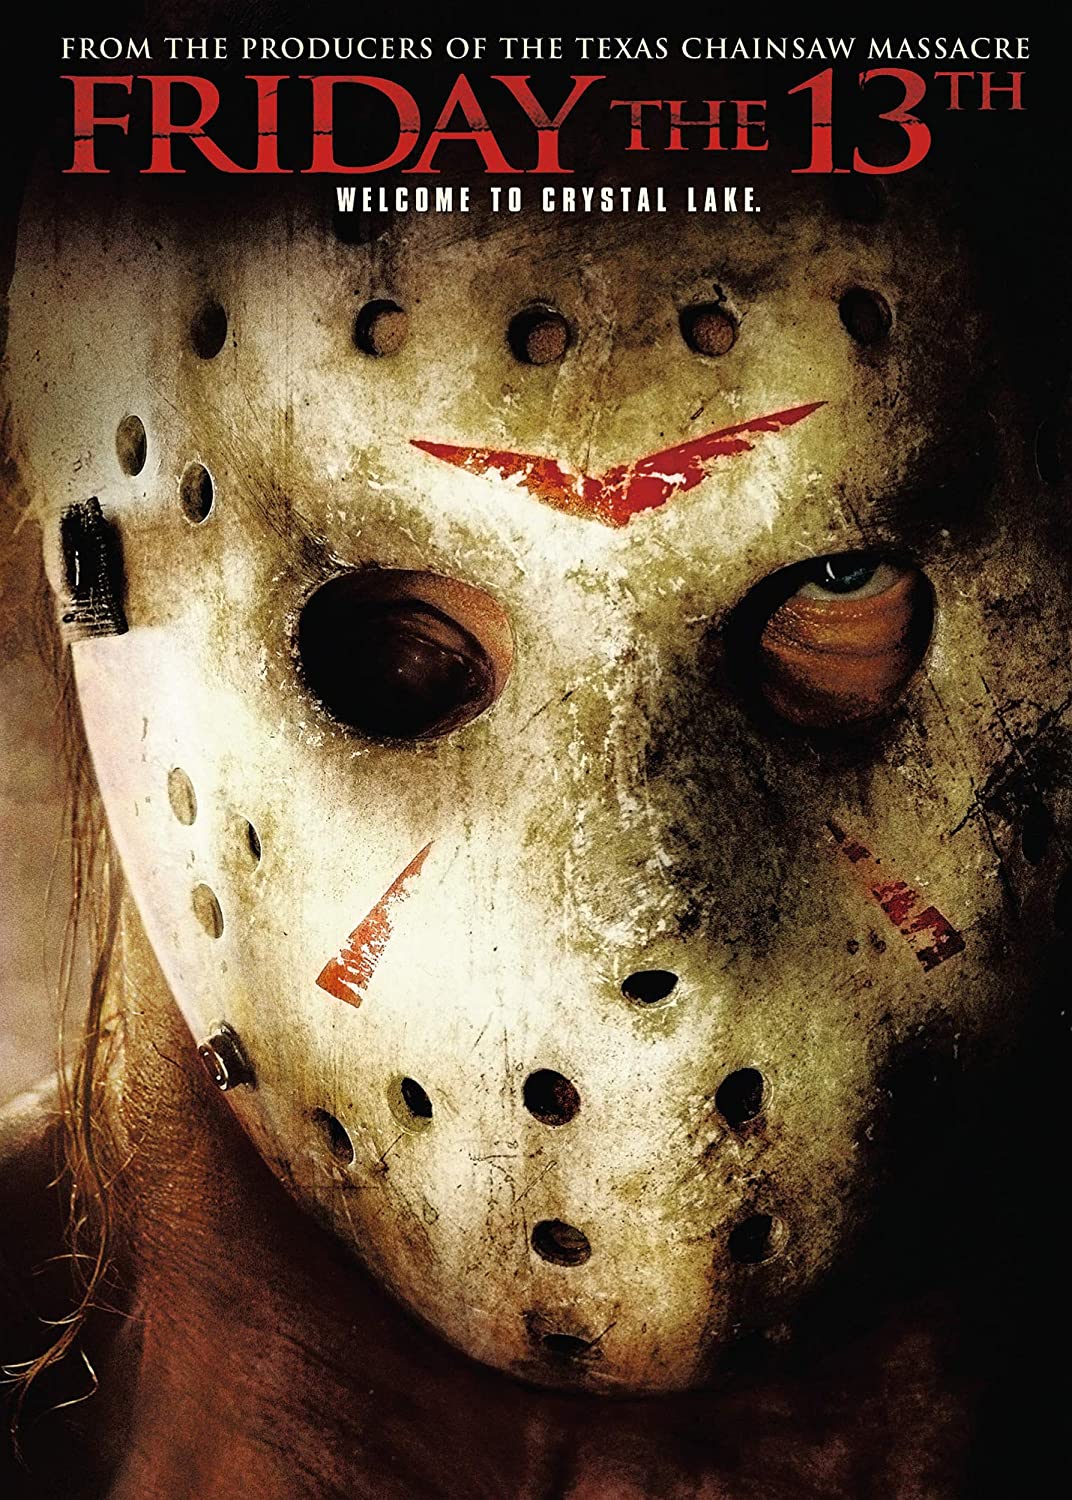 Friday The 13th: Extended Cut - Horror/Slasher [DVD]